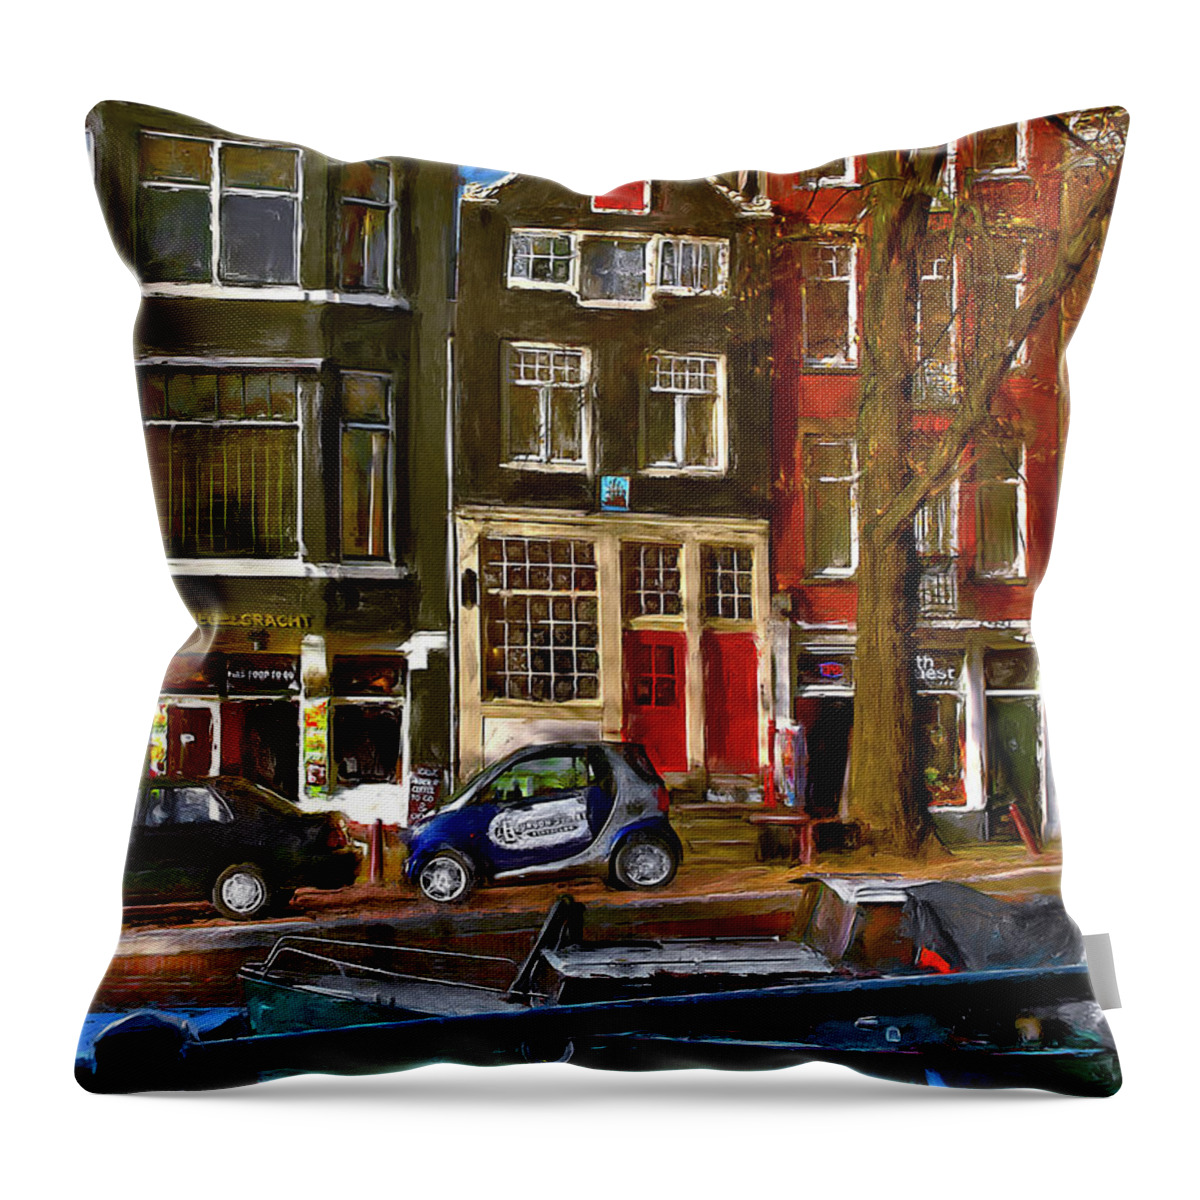 Holland Amsterdam Throw Pillow featuring the photograph Spiegelgracht 6. Amsterdam #1 by Juan Carlos Ferro Duque